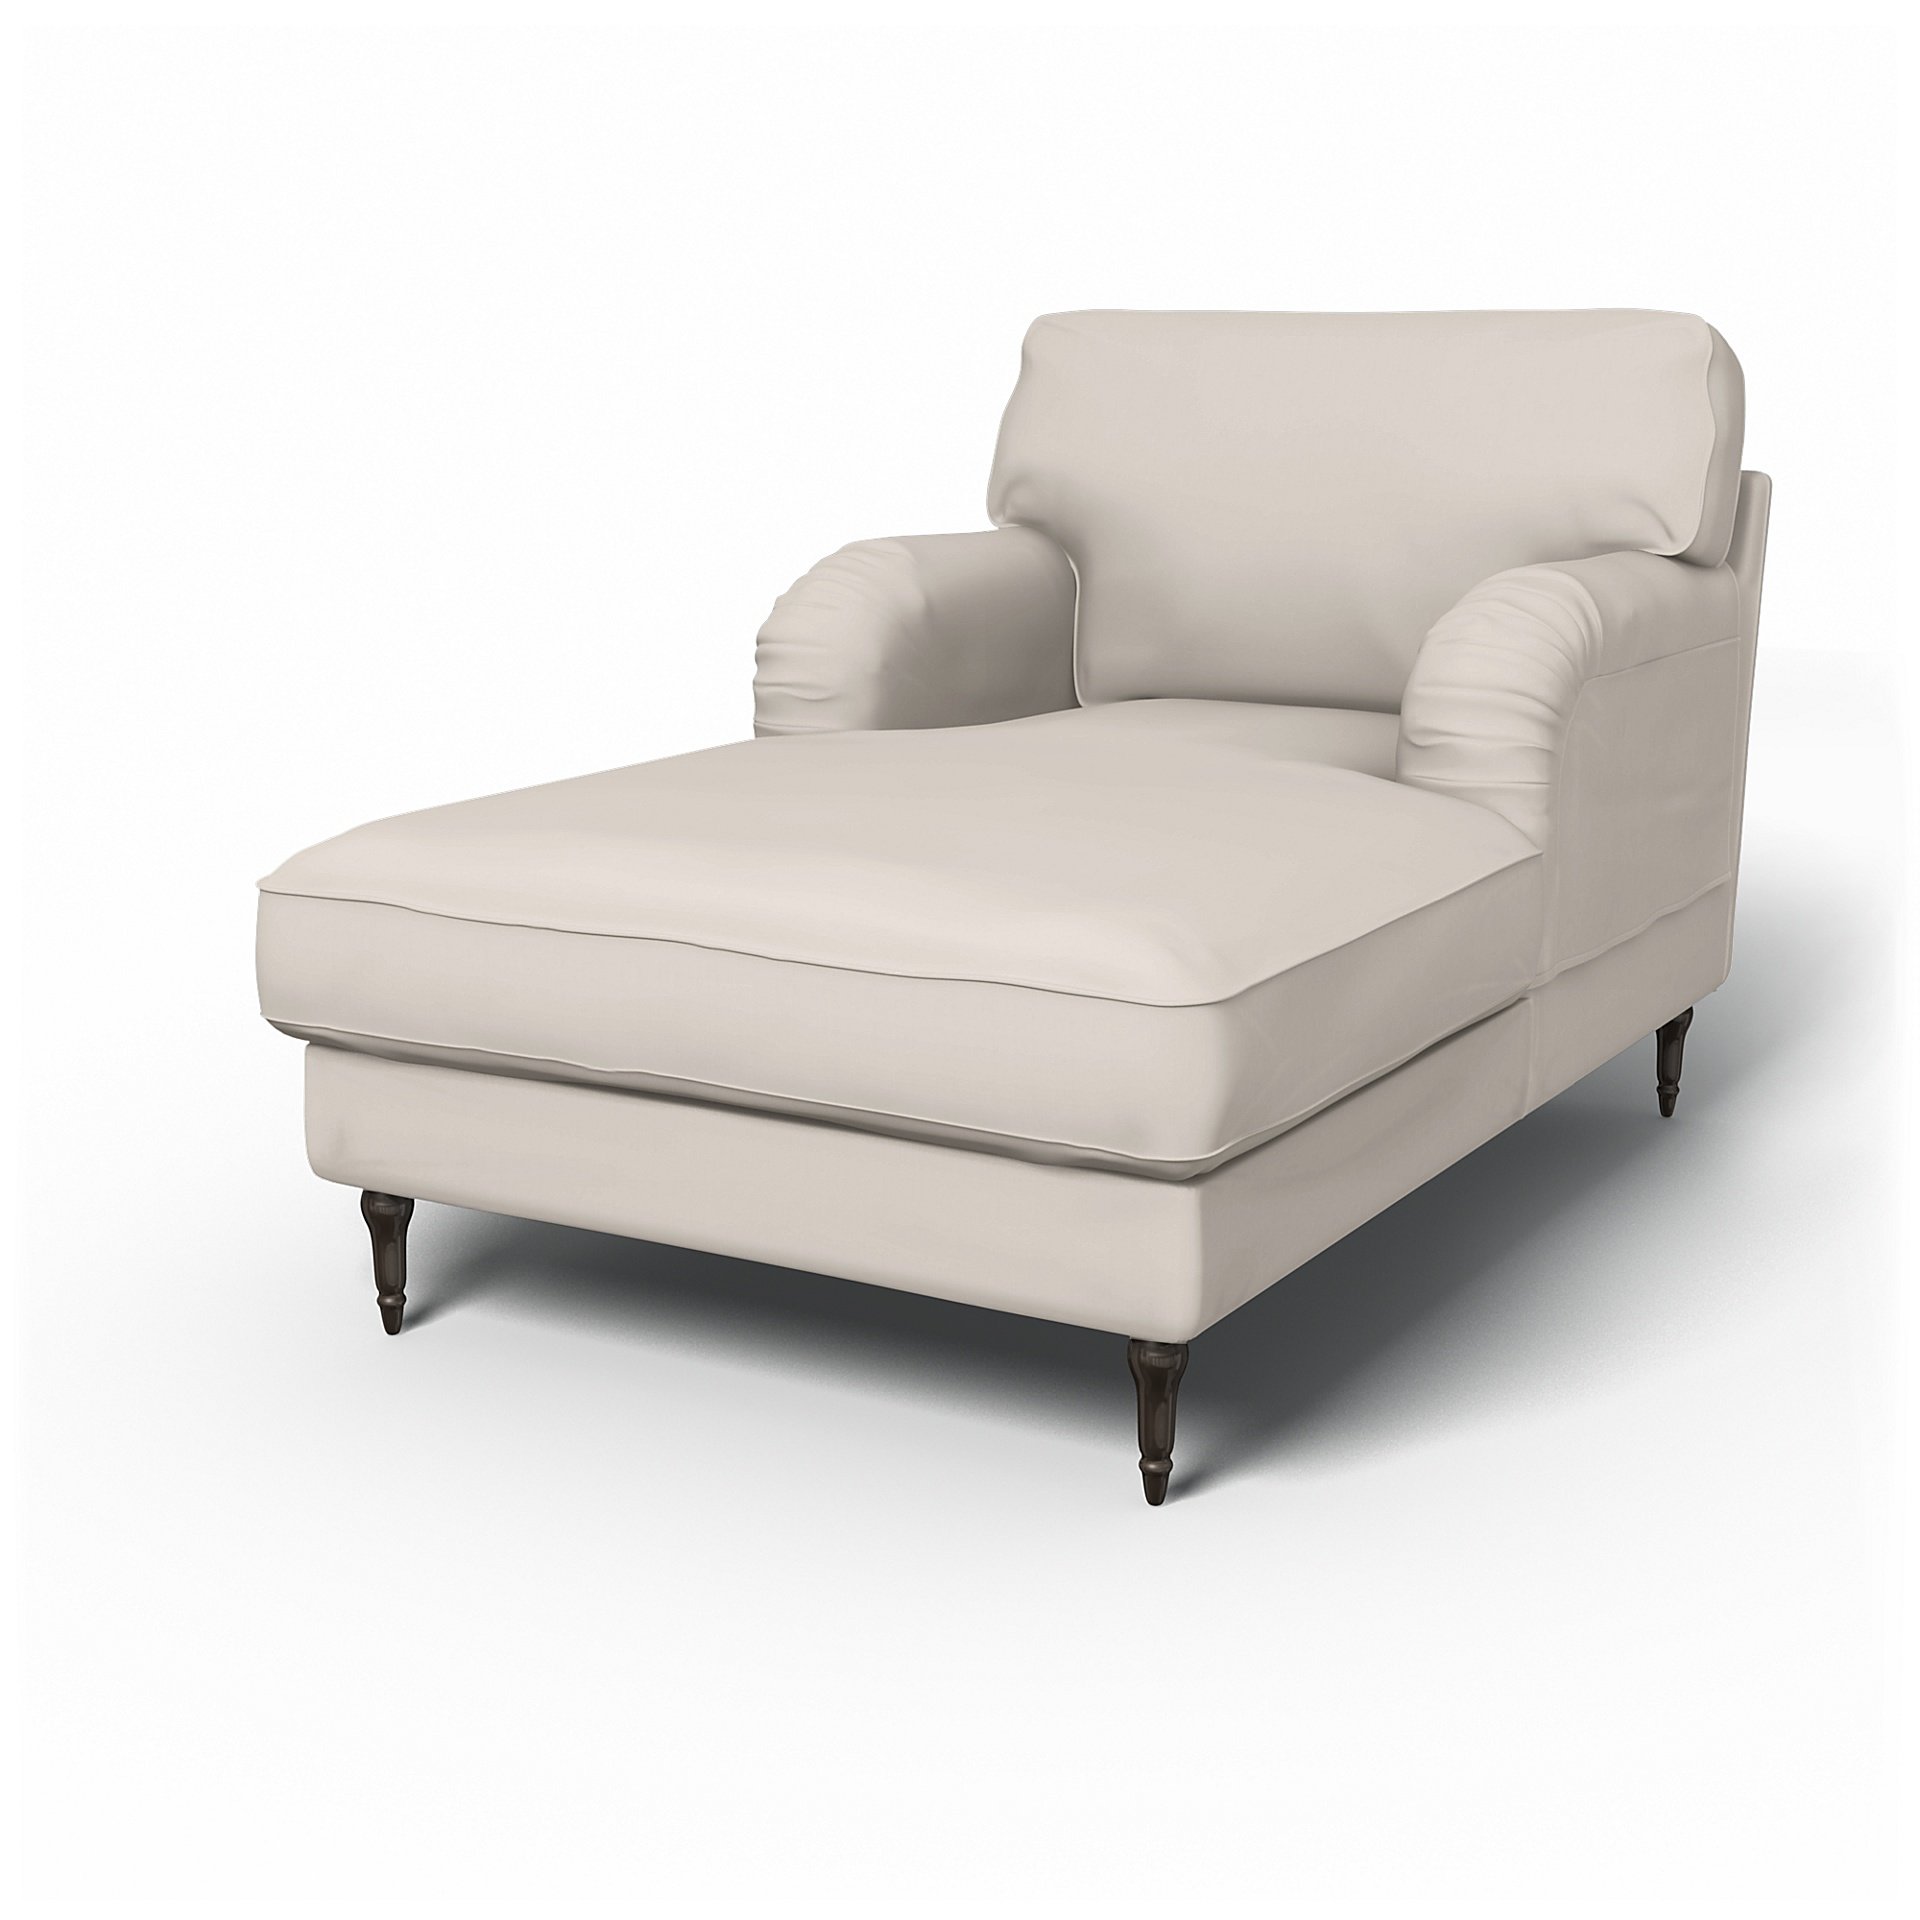 IKEA - Stocksund Chaise Longue Cover, Soft White, Cotton - Bemz